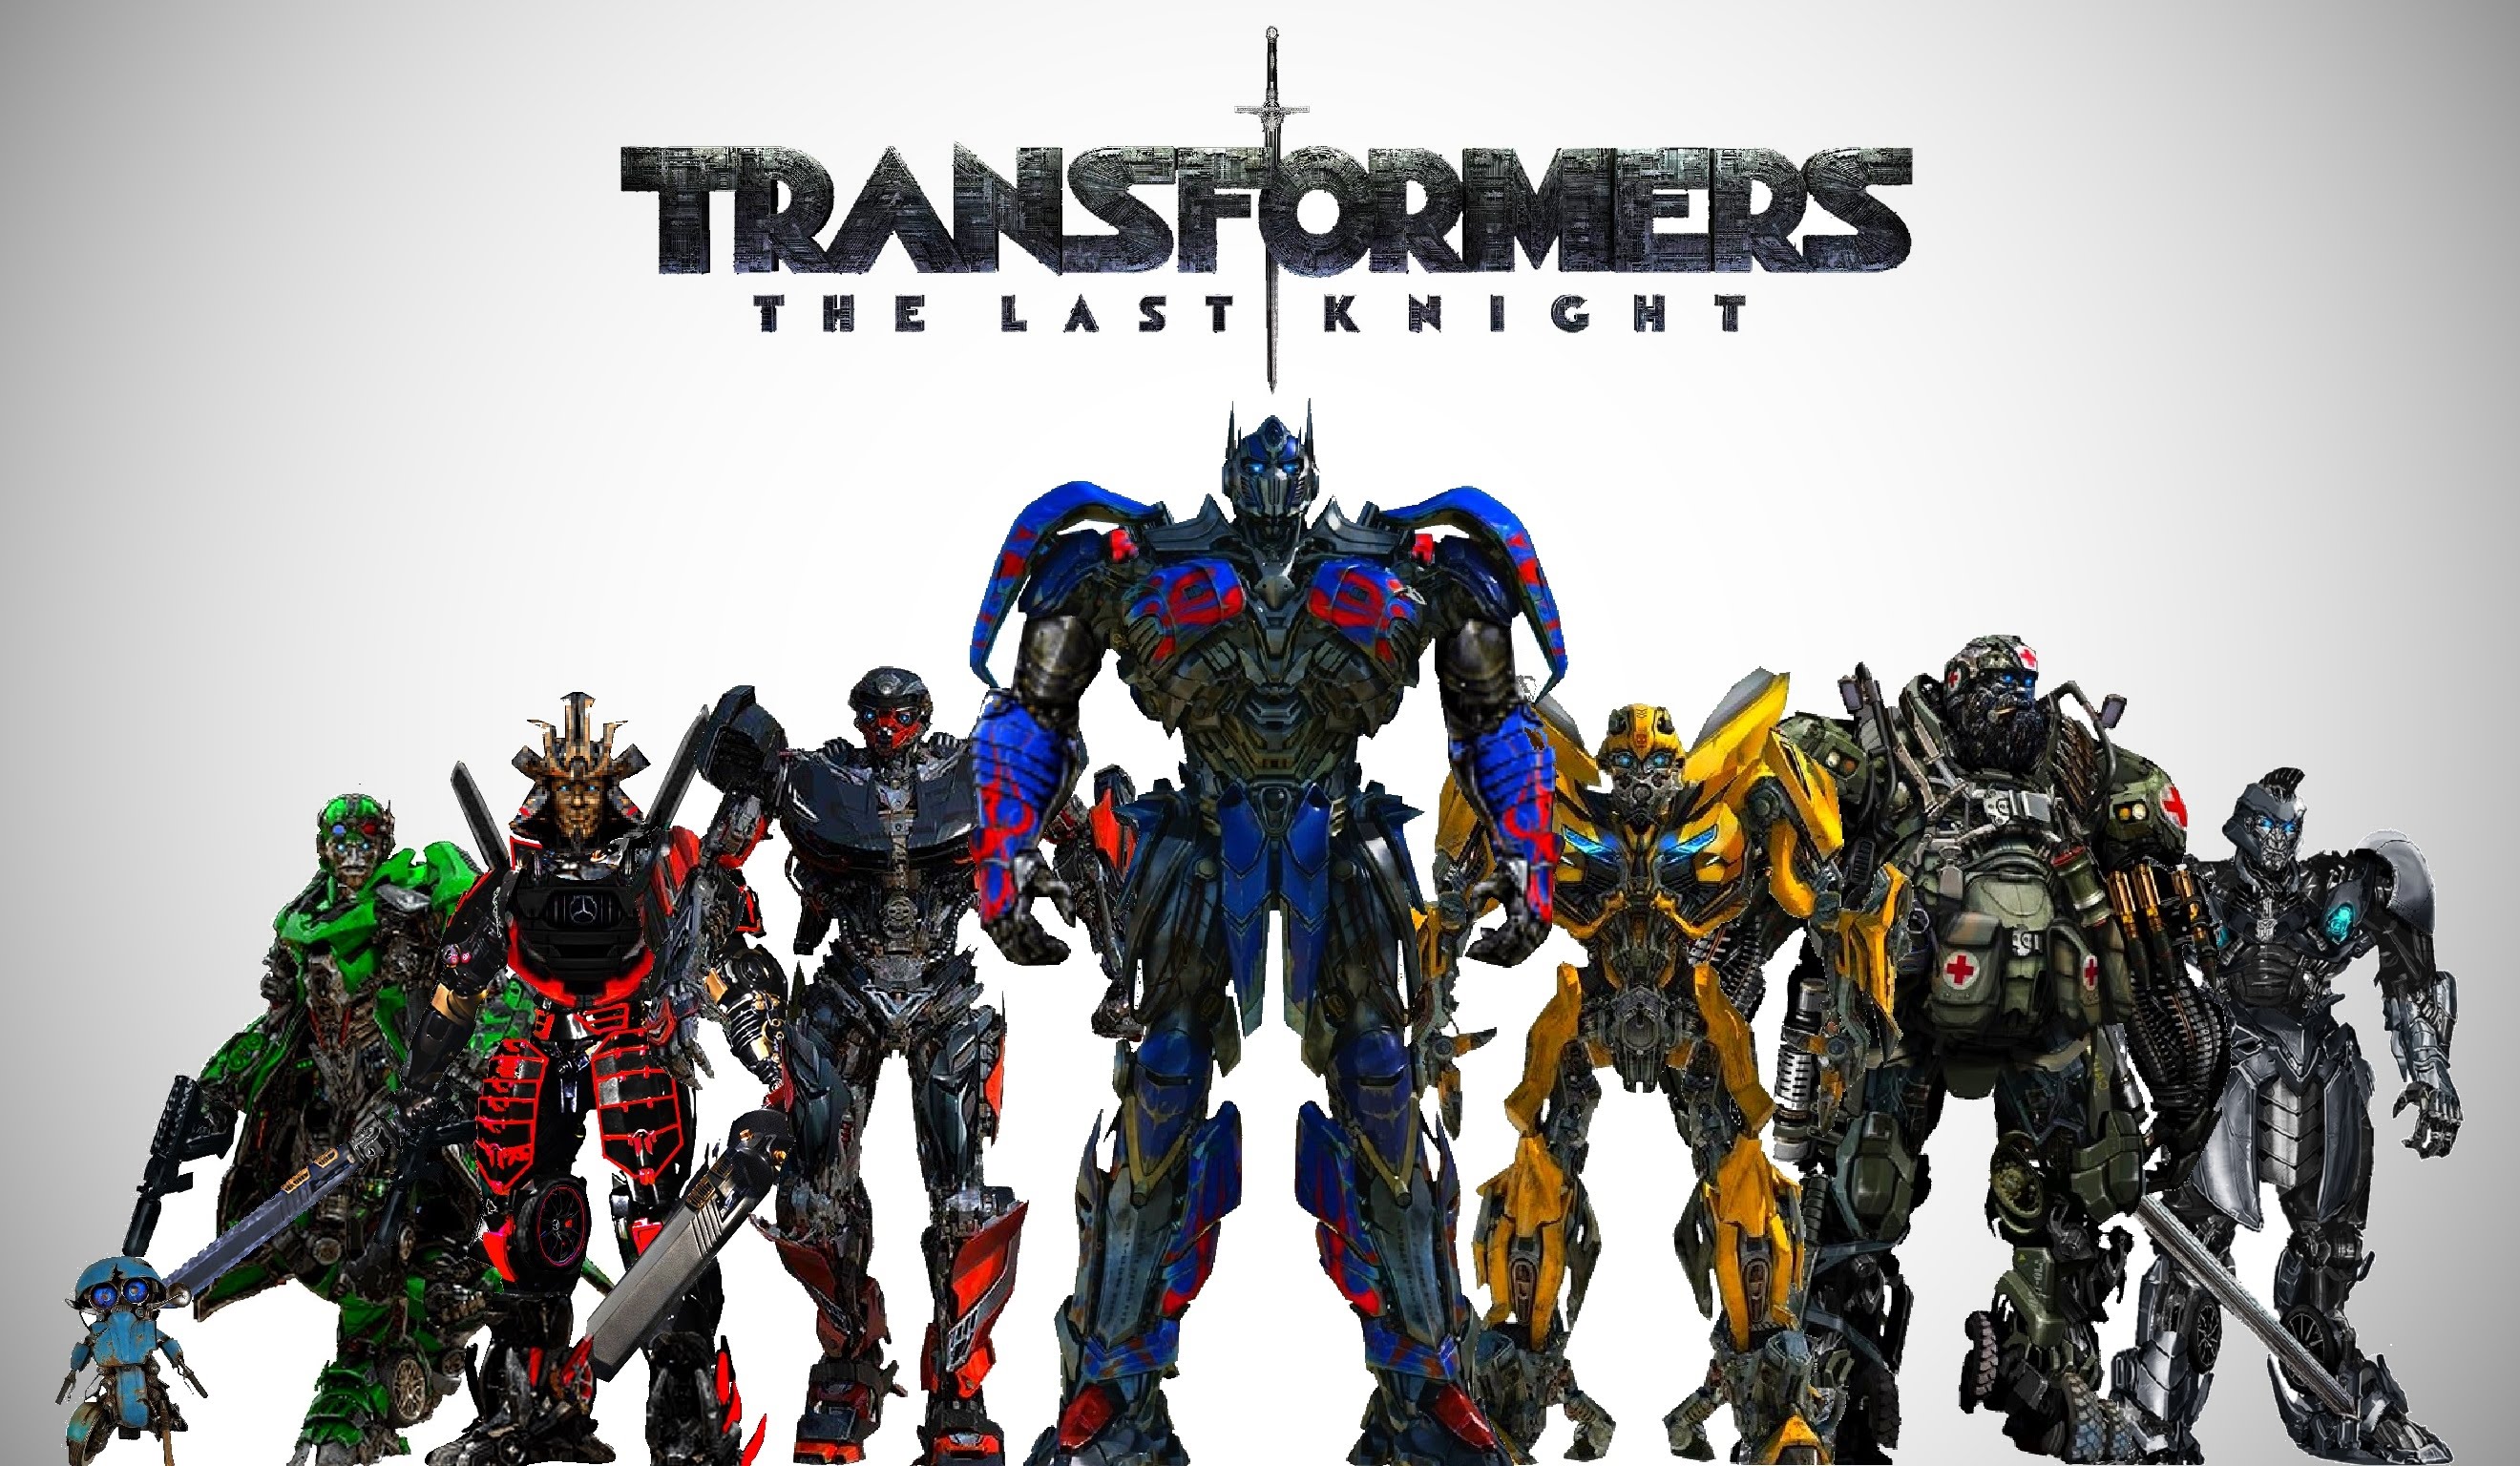 last transformer movie made